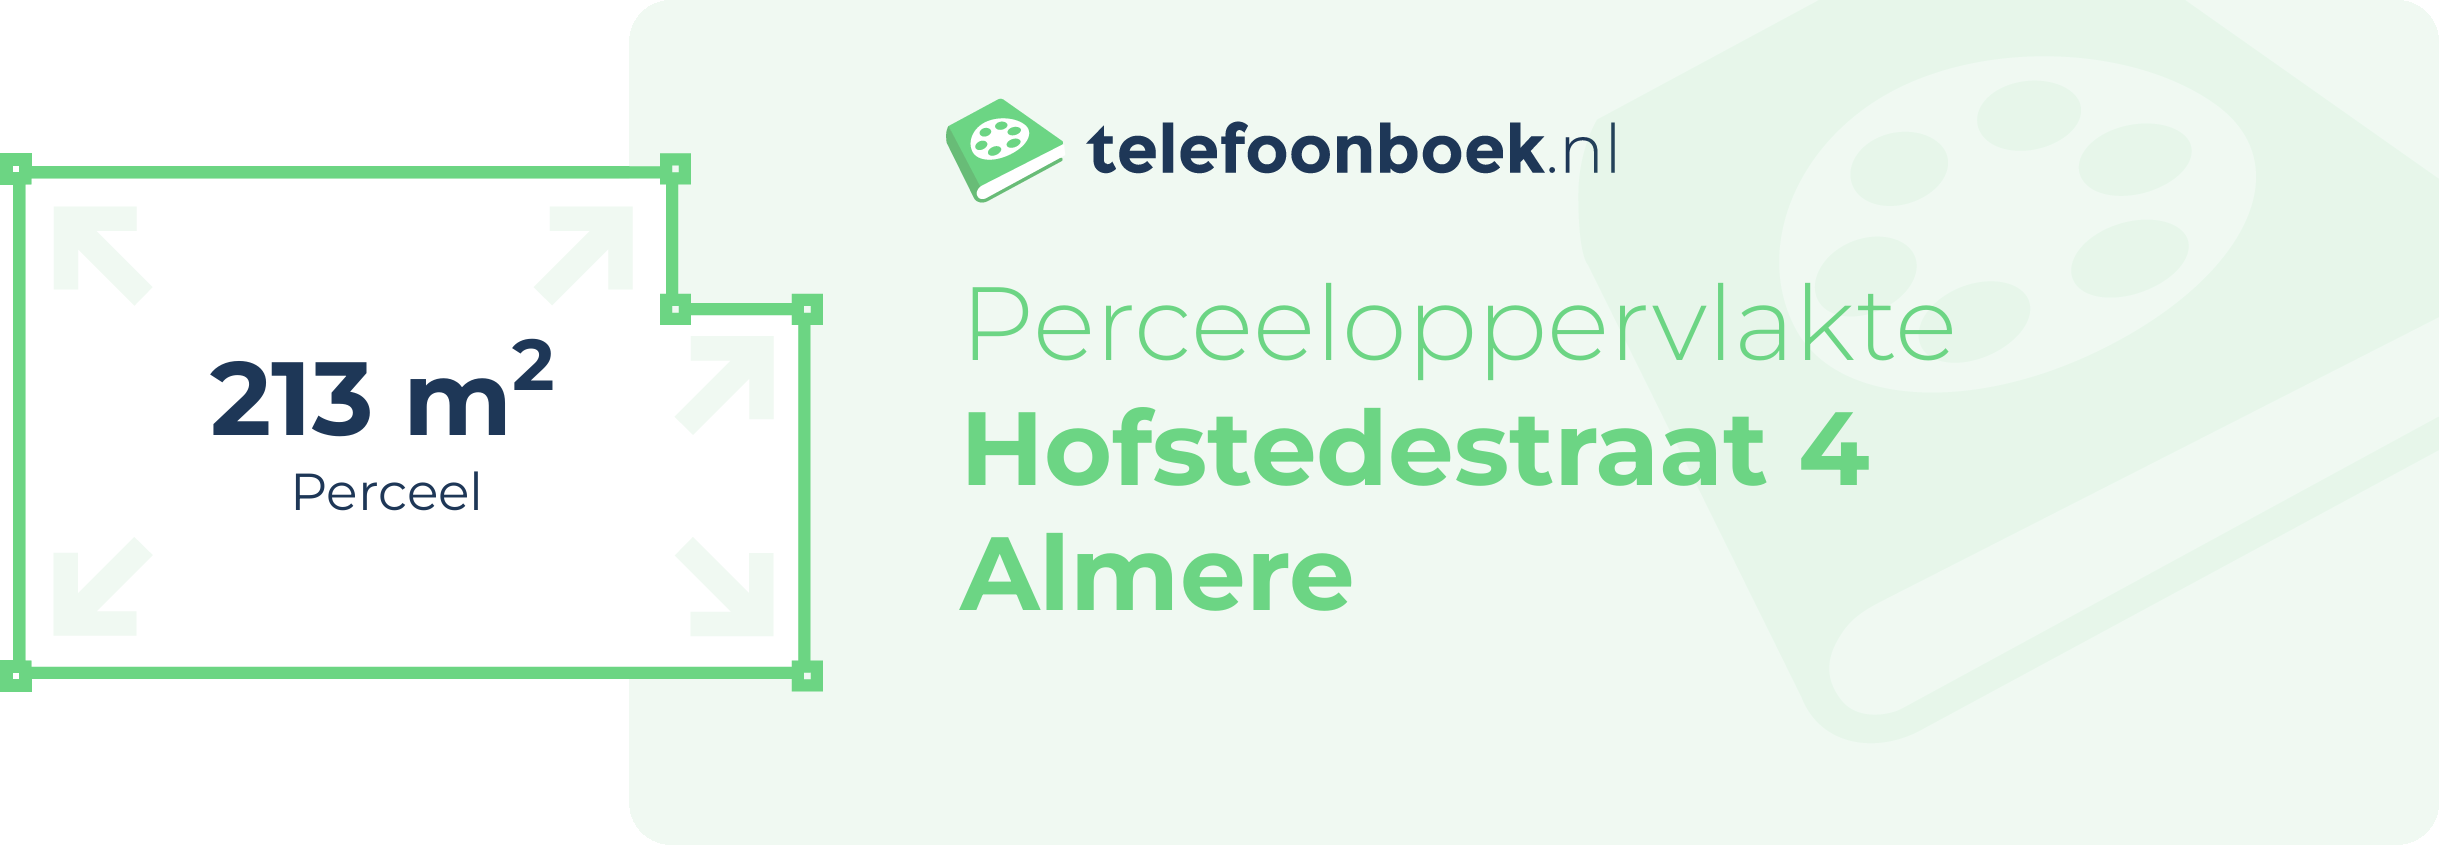 Perceeloppervlakte Hofstedestraat 4 Almere